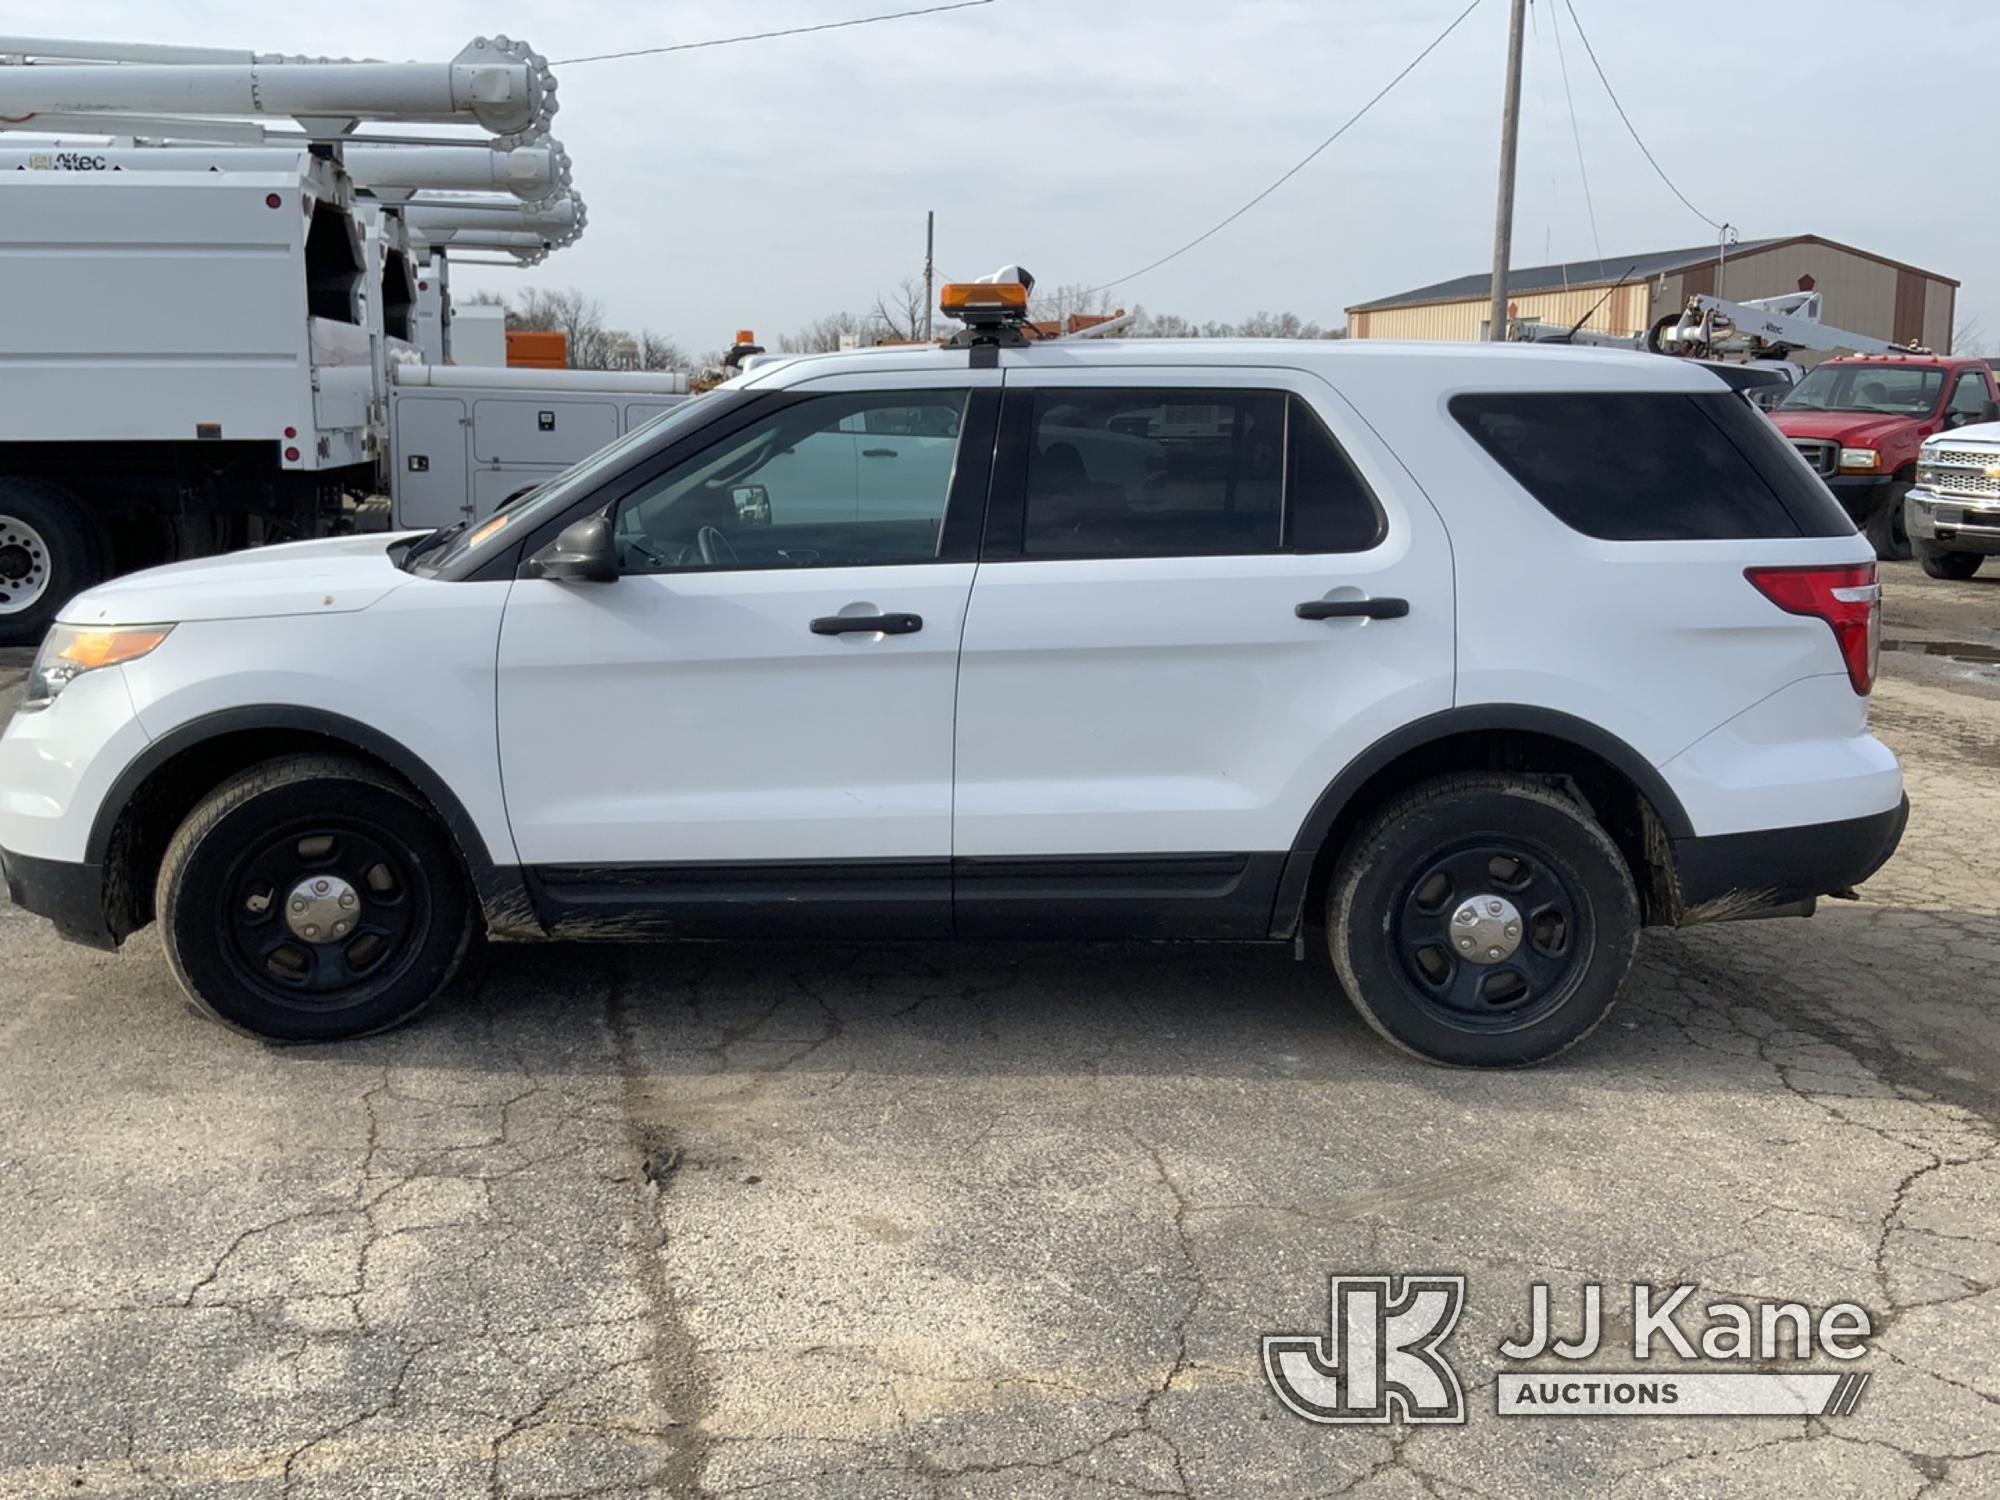 (South Beloit, IL) 2015 Ford Explorer AWD Police Interceptor 4-Door Sport Utility Vehicle Runs, Move